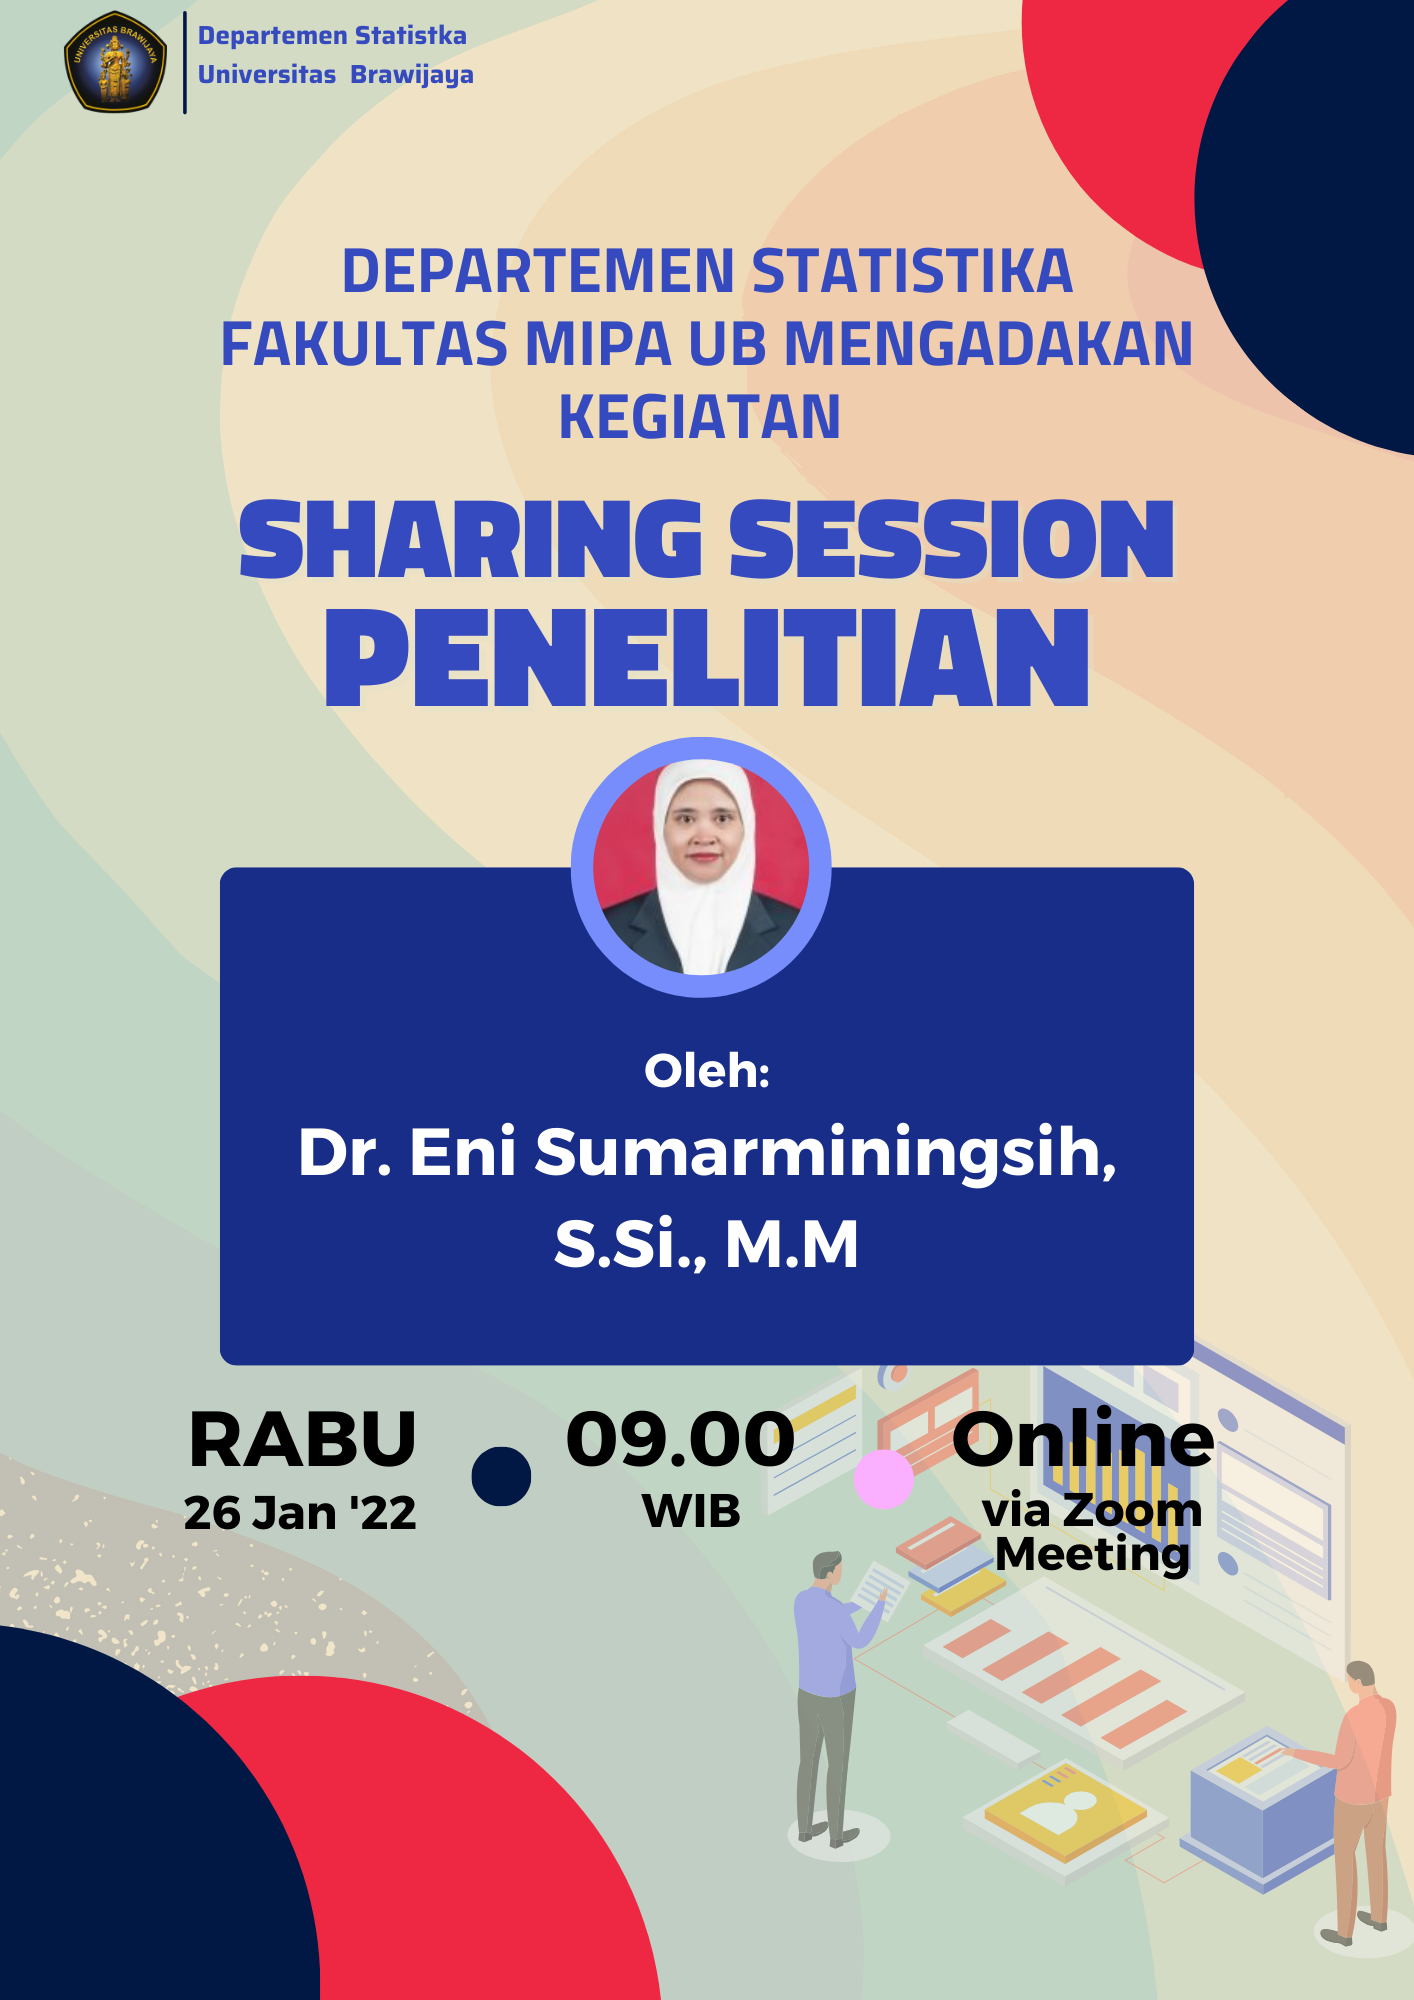 Sharing Session Penelitian oleh Dr. Eni Sumarminingsih, S.Si., M.M.